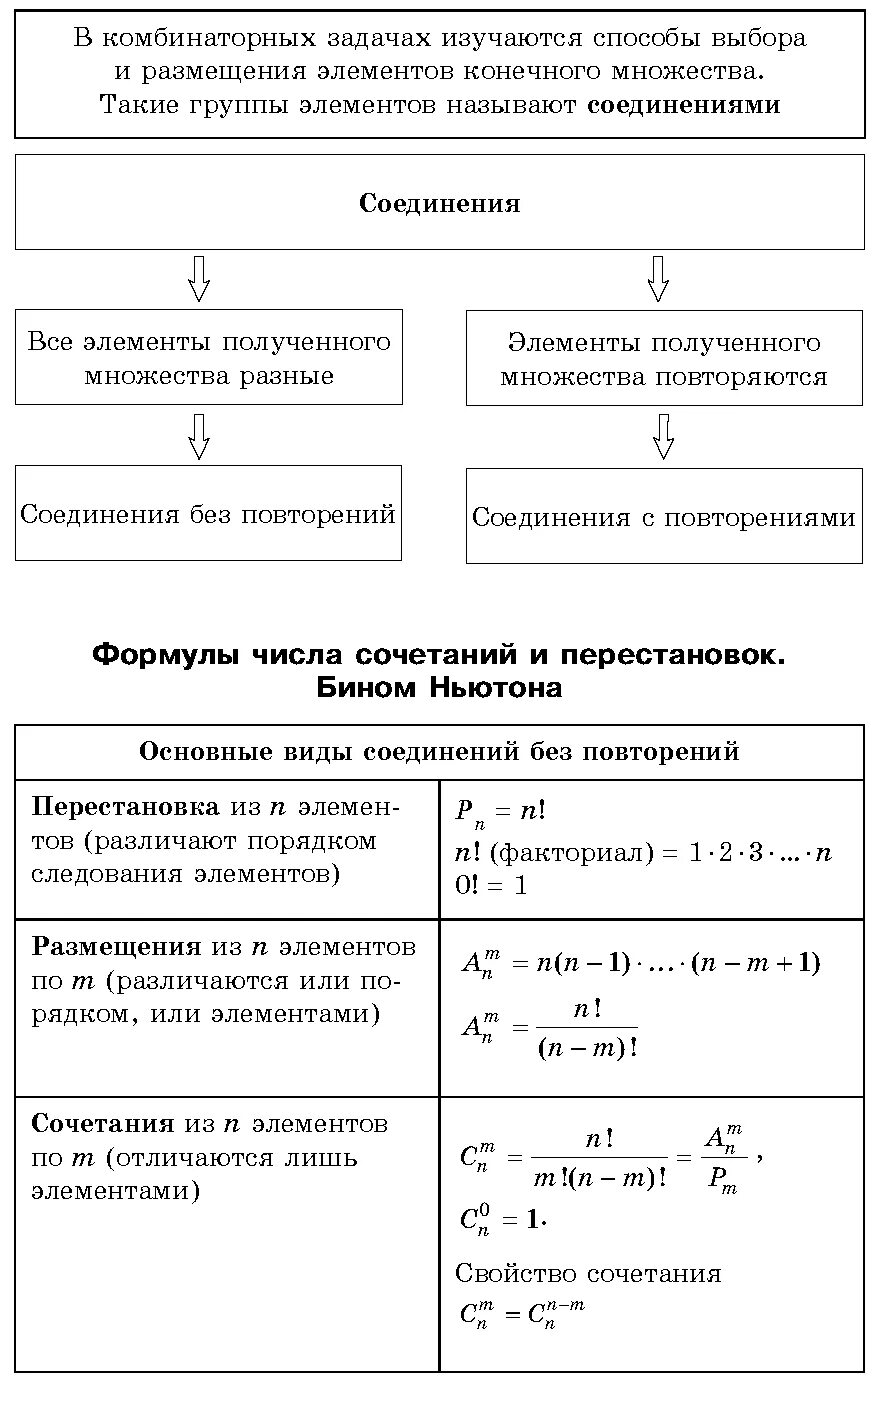 Алгебра 9 класс элементы комбинаторики. Формулы комбинаторики в теории вероятностей. Формулы по комбинаторике и теории вероятности. Формулы комбинаторики и теории вероятности 9 класс. Элементы комбинаторики и теории вероятностей формулы.